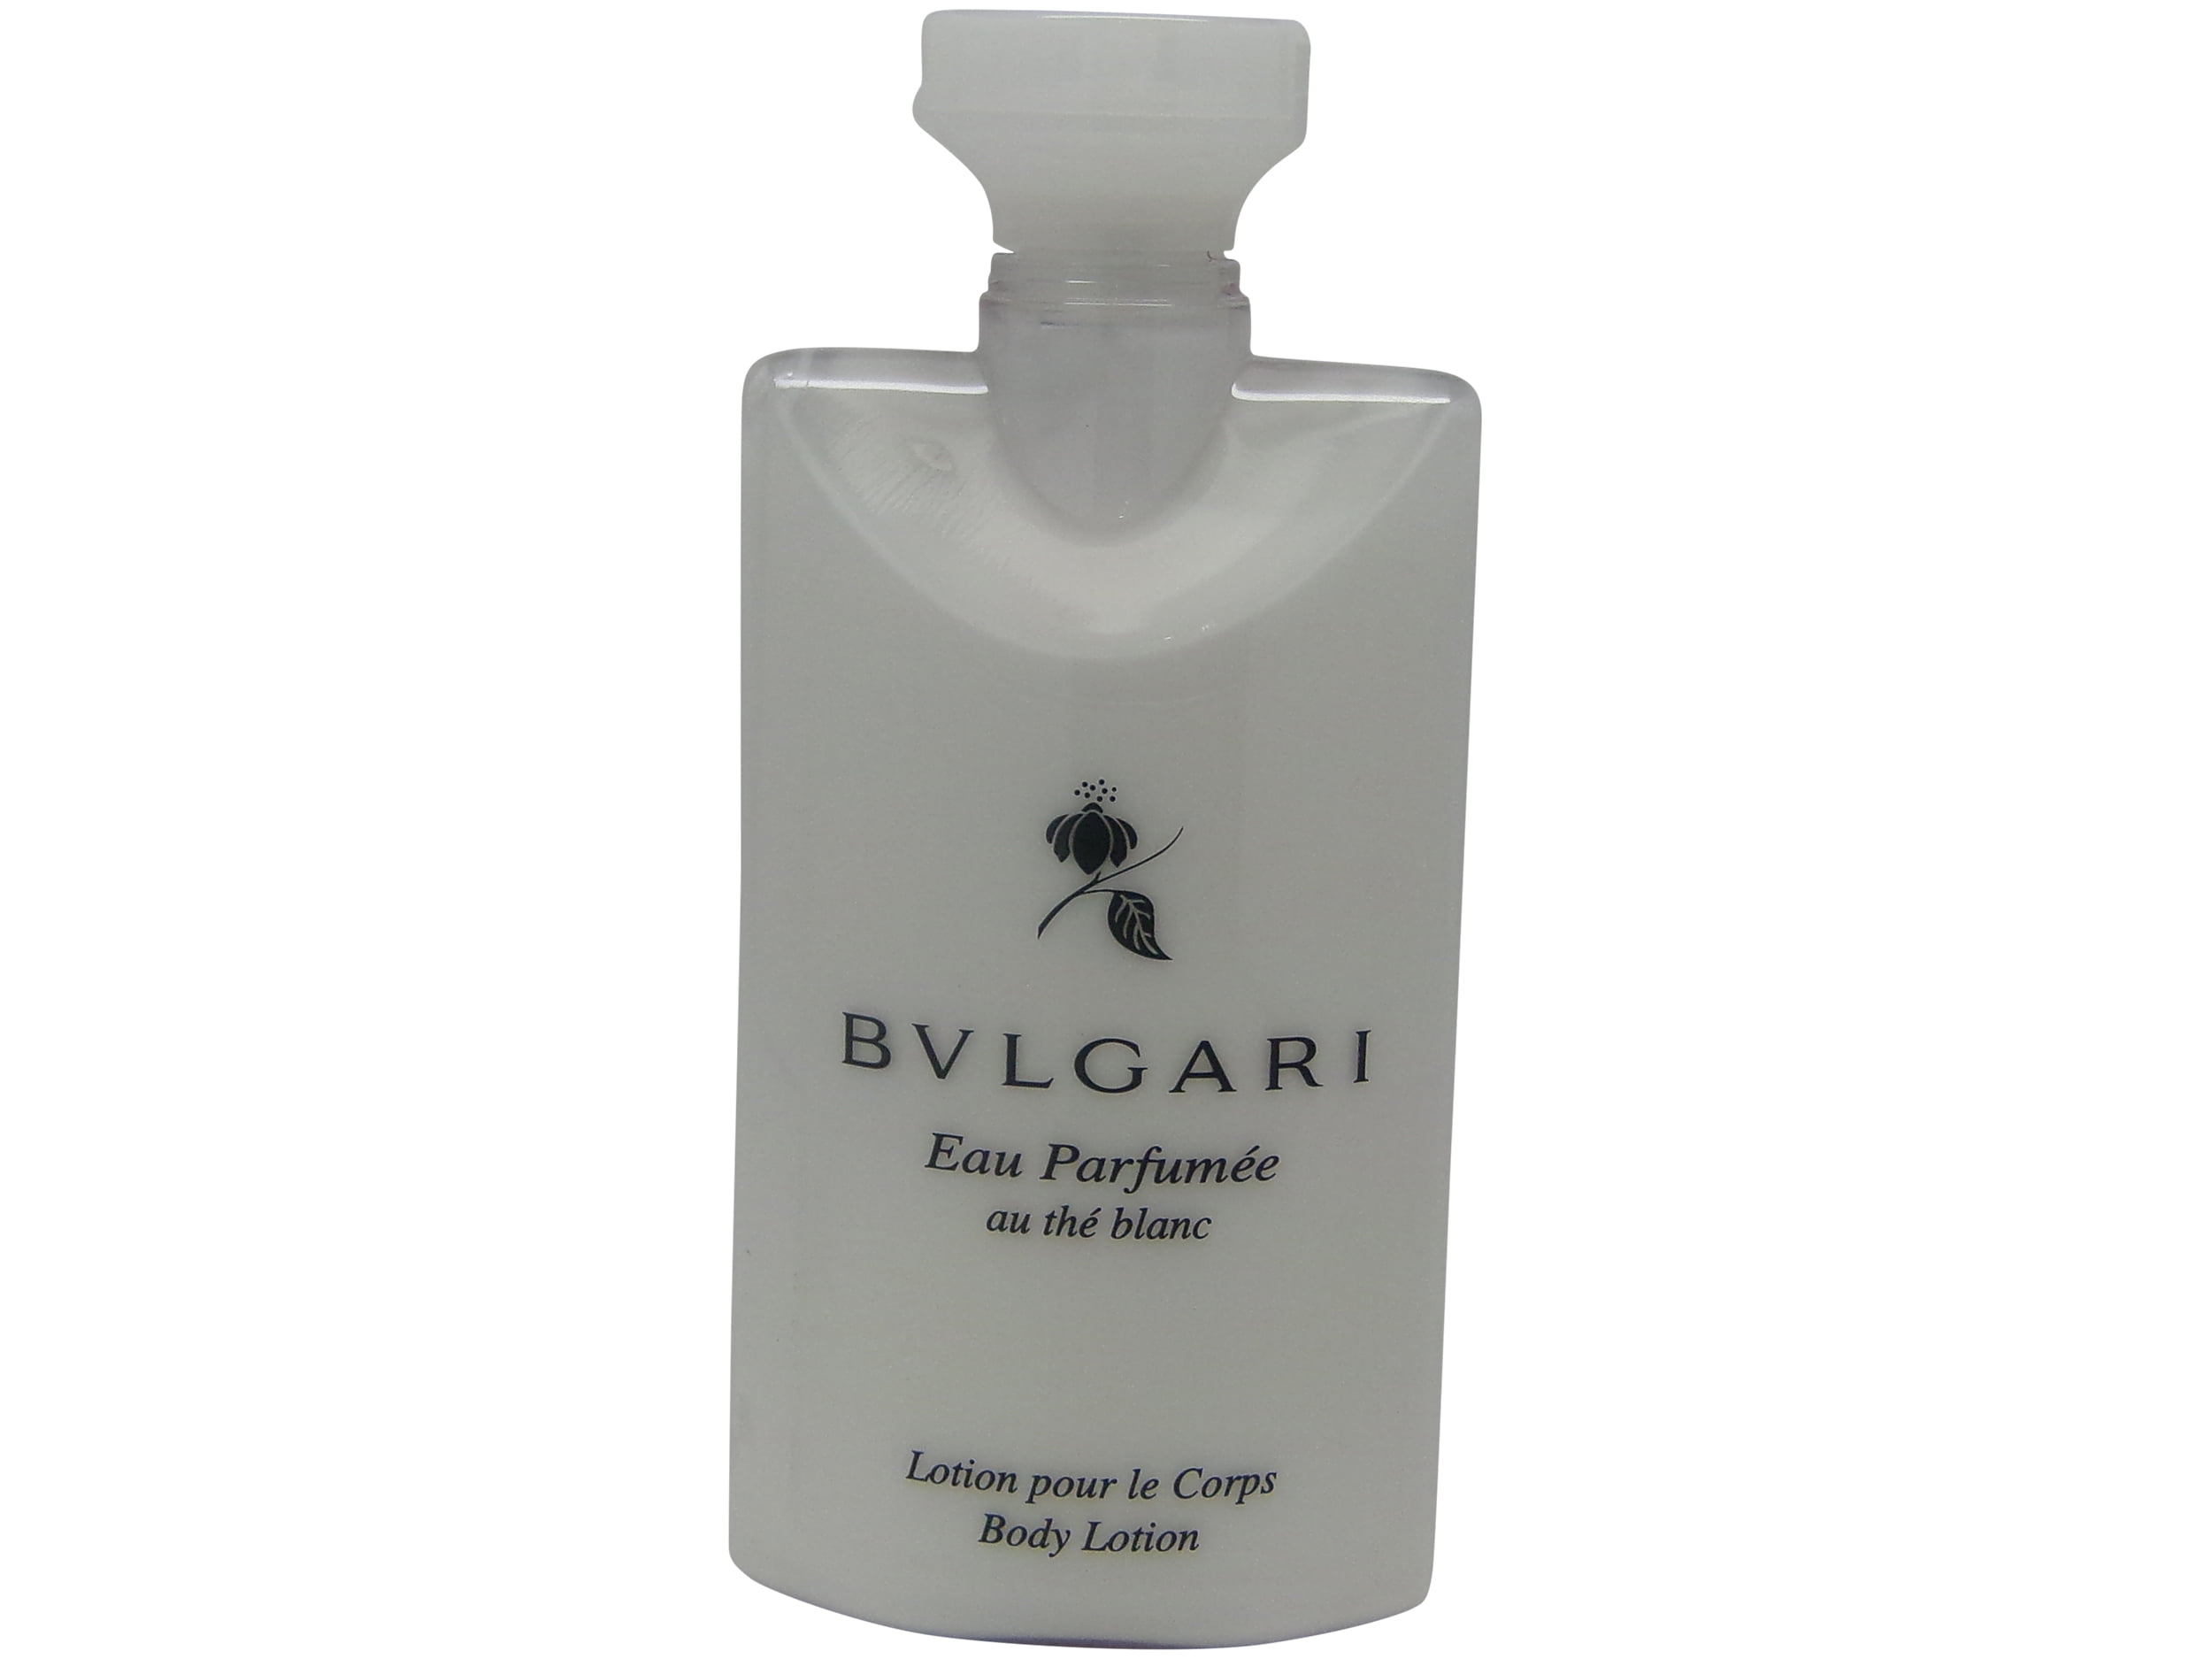  BVLGARI Eau Parfumee au the blanc White Tea Hand Lotion - 10.1  Fluid Ounces/300 mL : Beauty & Personal Care